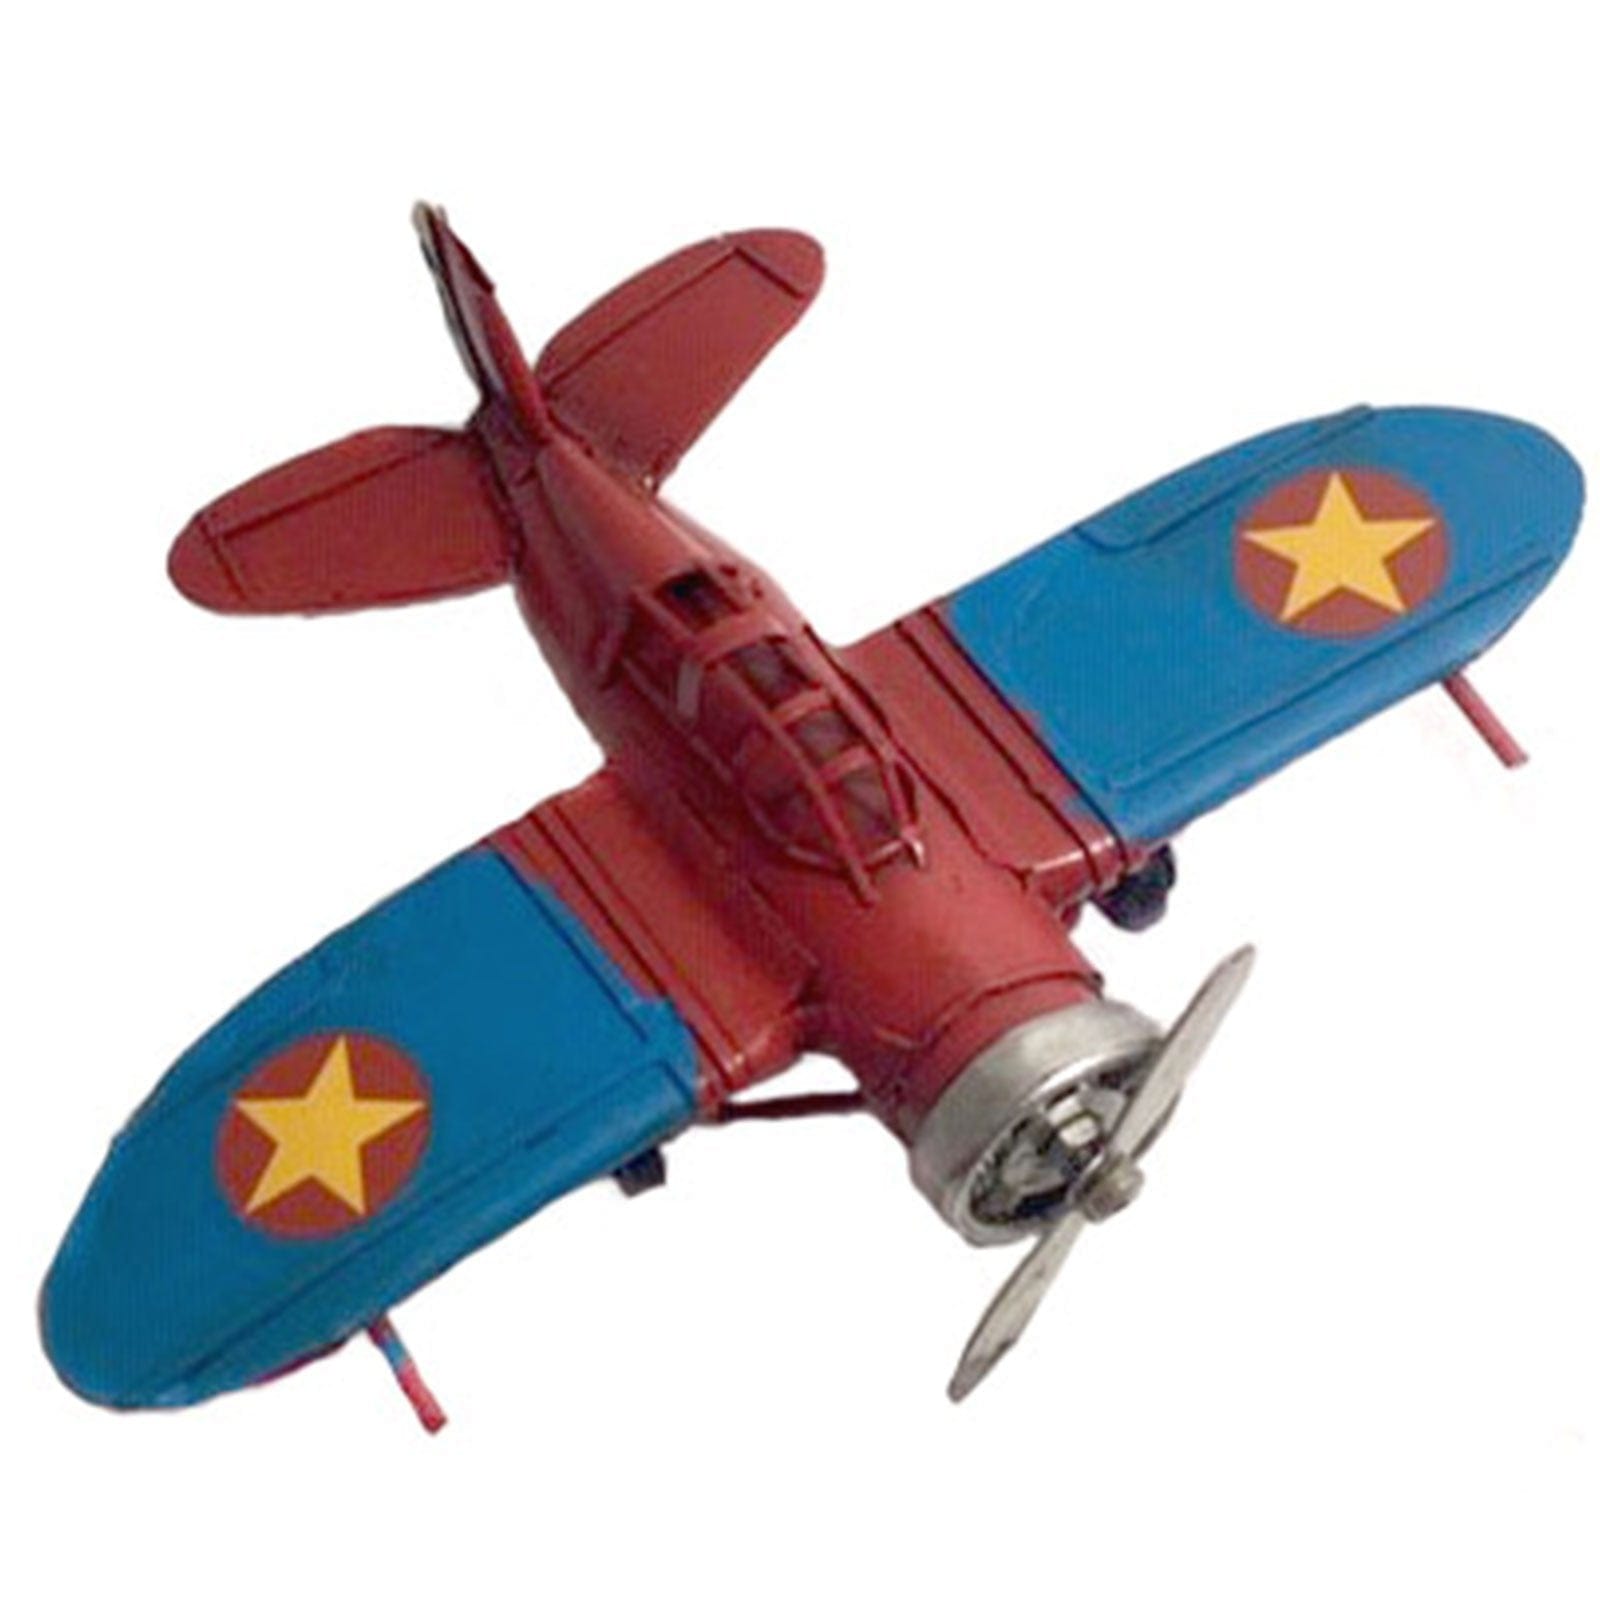 Red Mini Roamer Plane - Small Vintage Style Metal Plane.